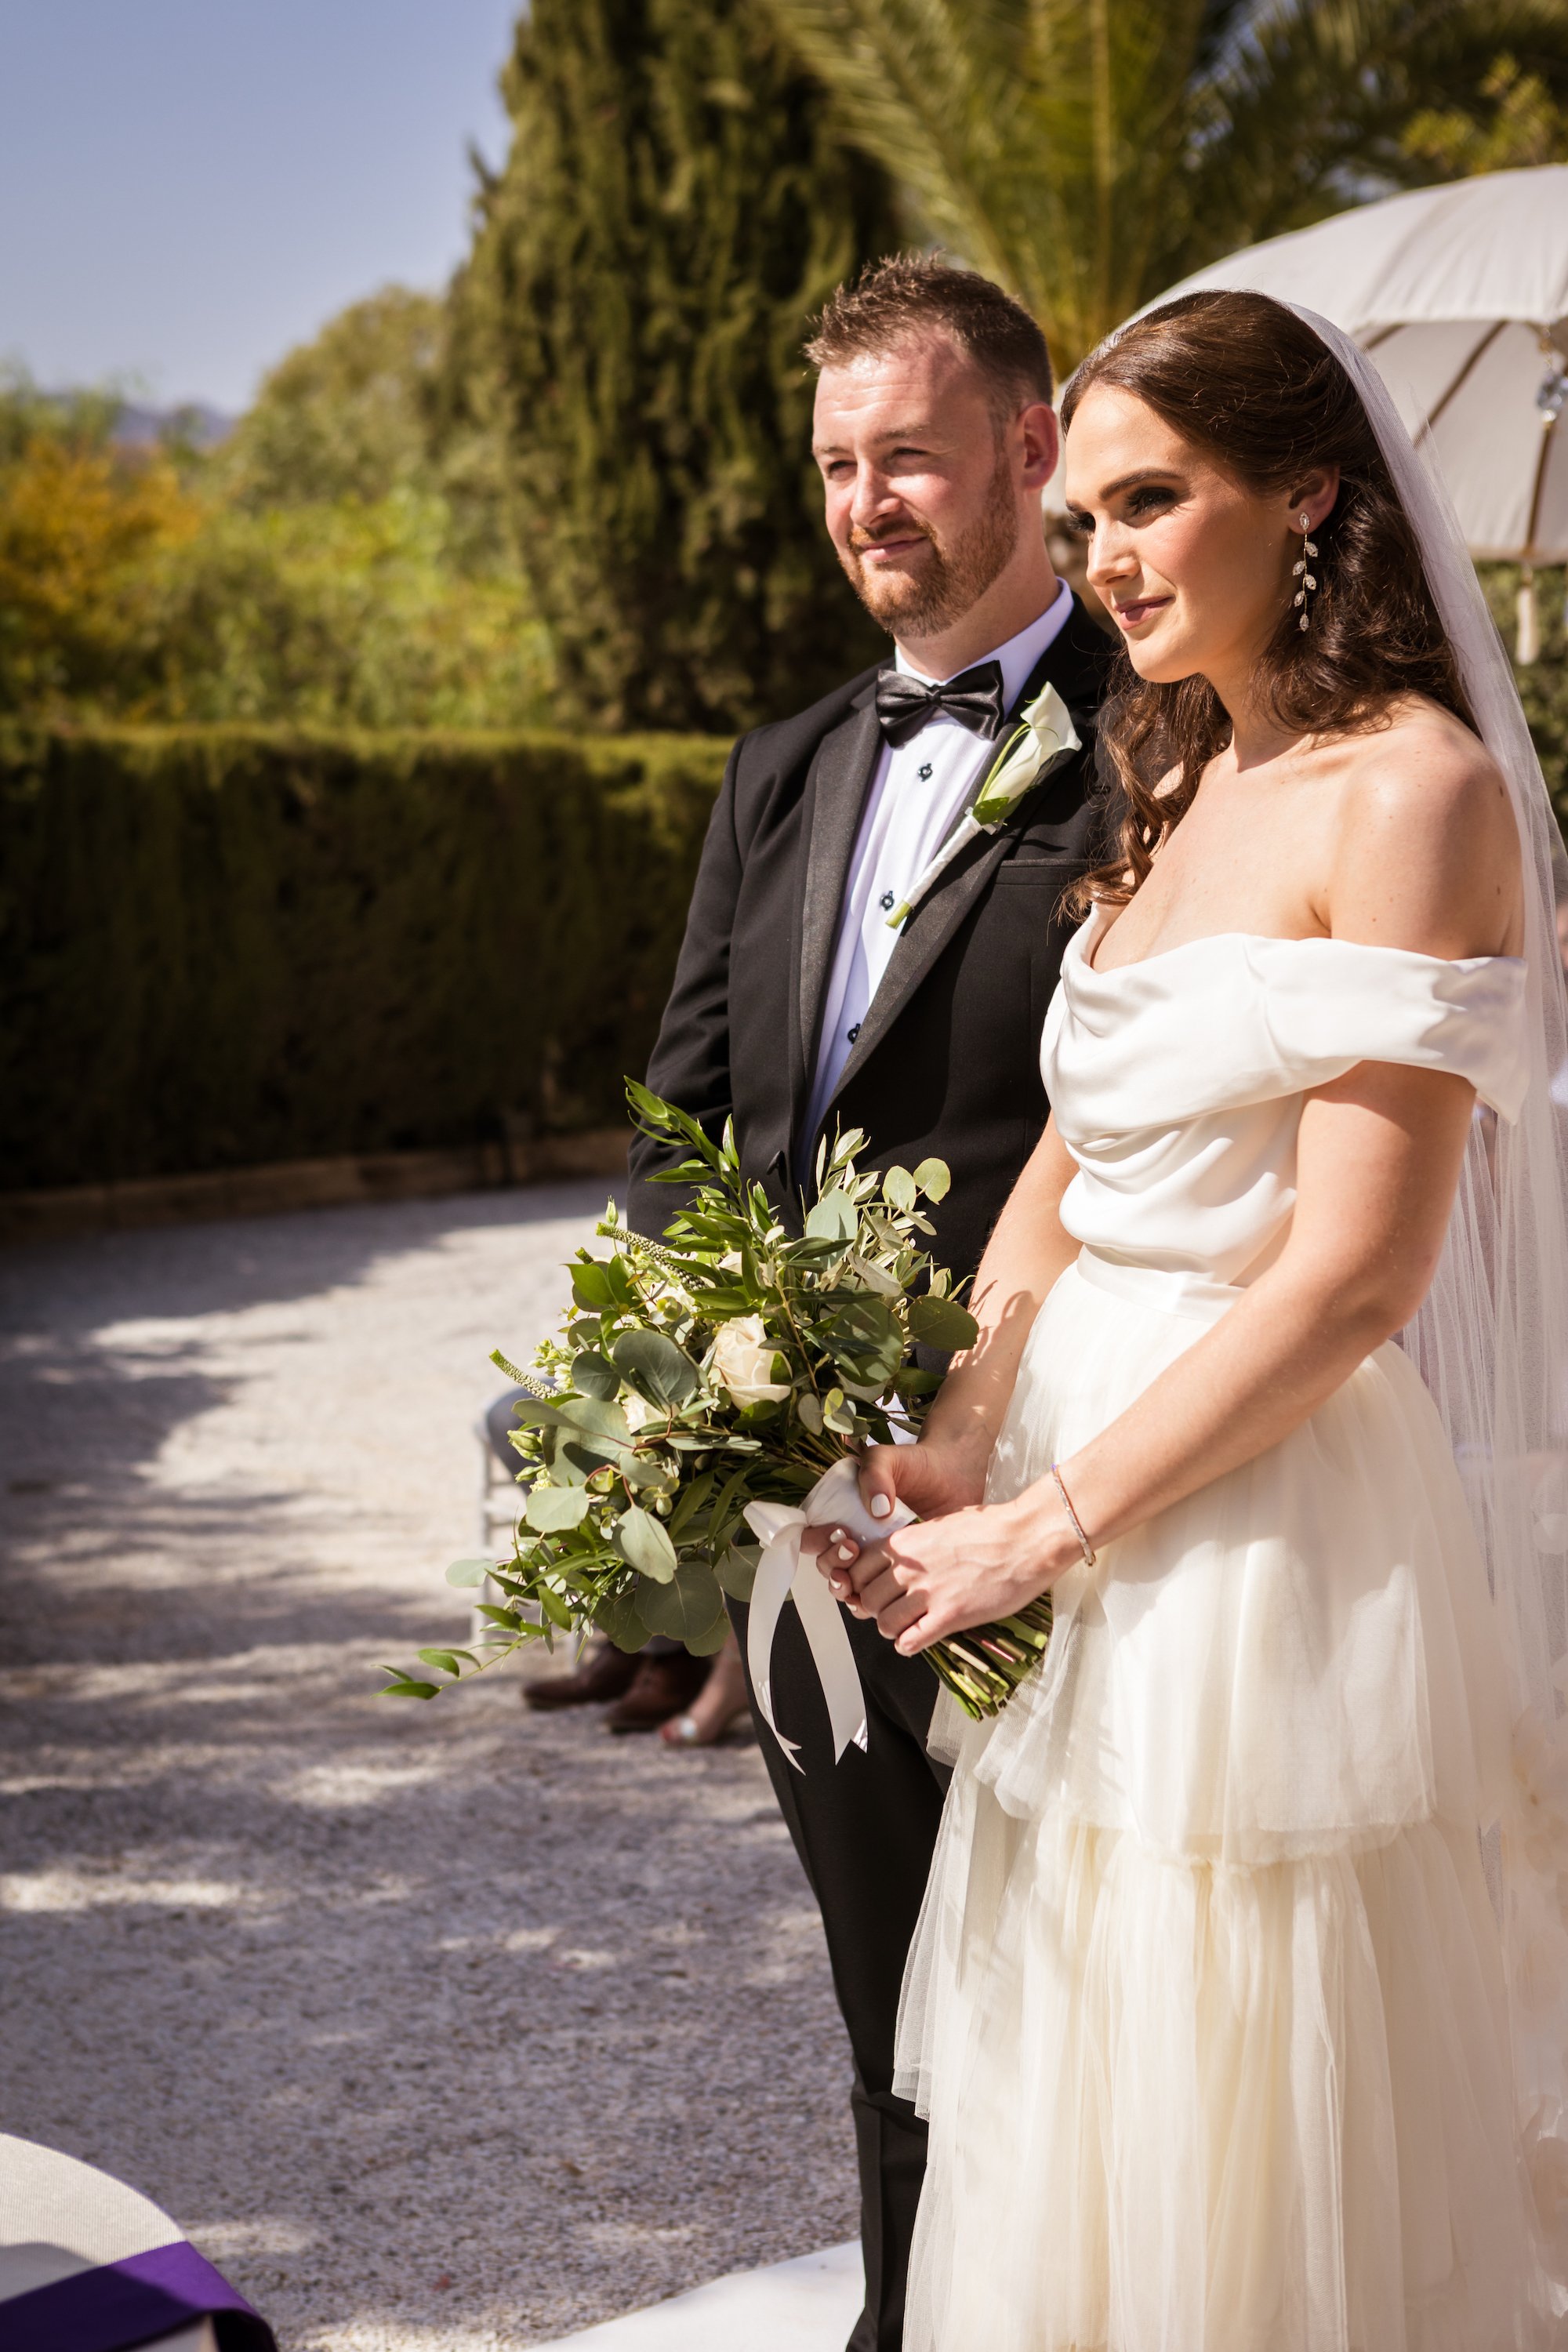 Beautiful bride Rebecca wore the Okotan corset and Rita skirt | Wedding dress by Halfpenny London